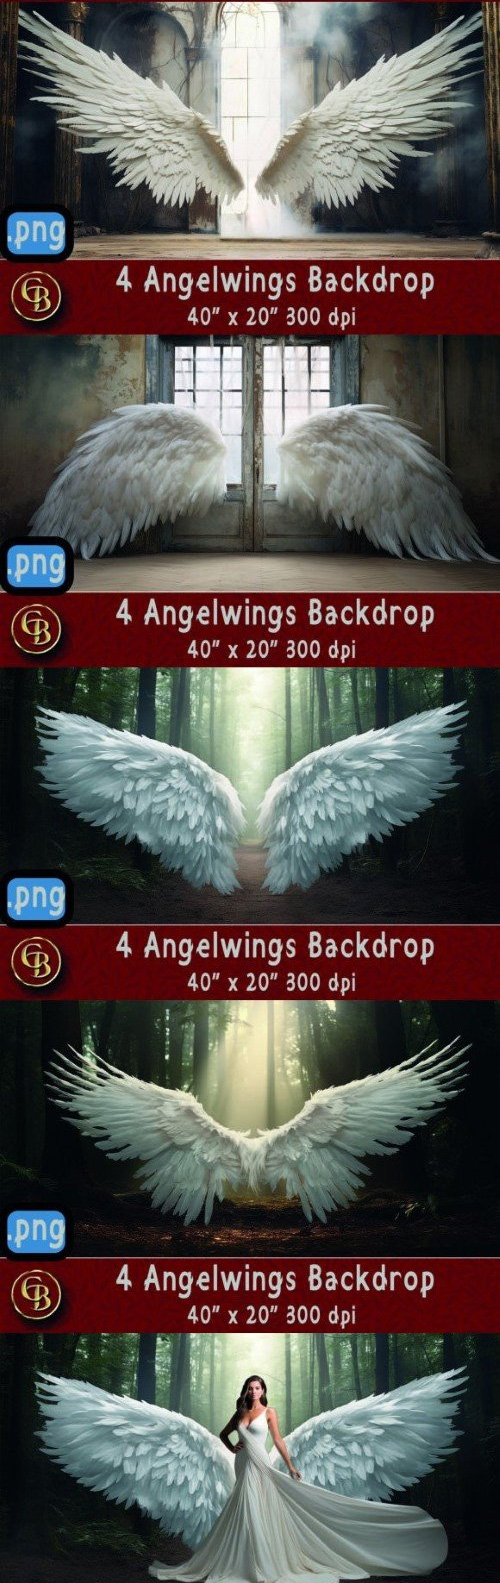 4 Angelwings Backdrops 40x20 300dpi